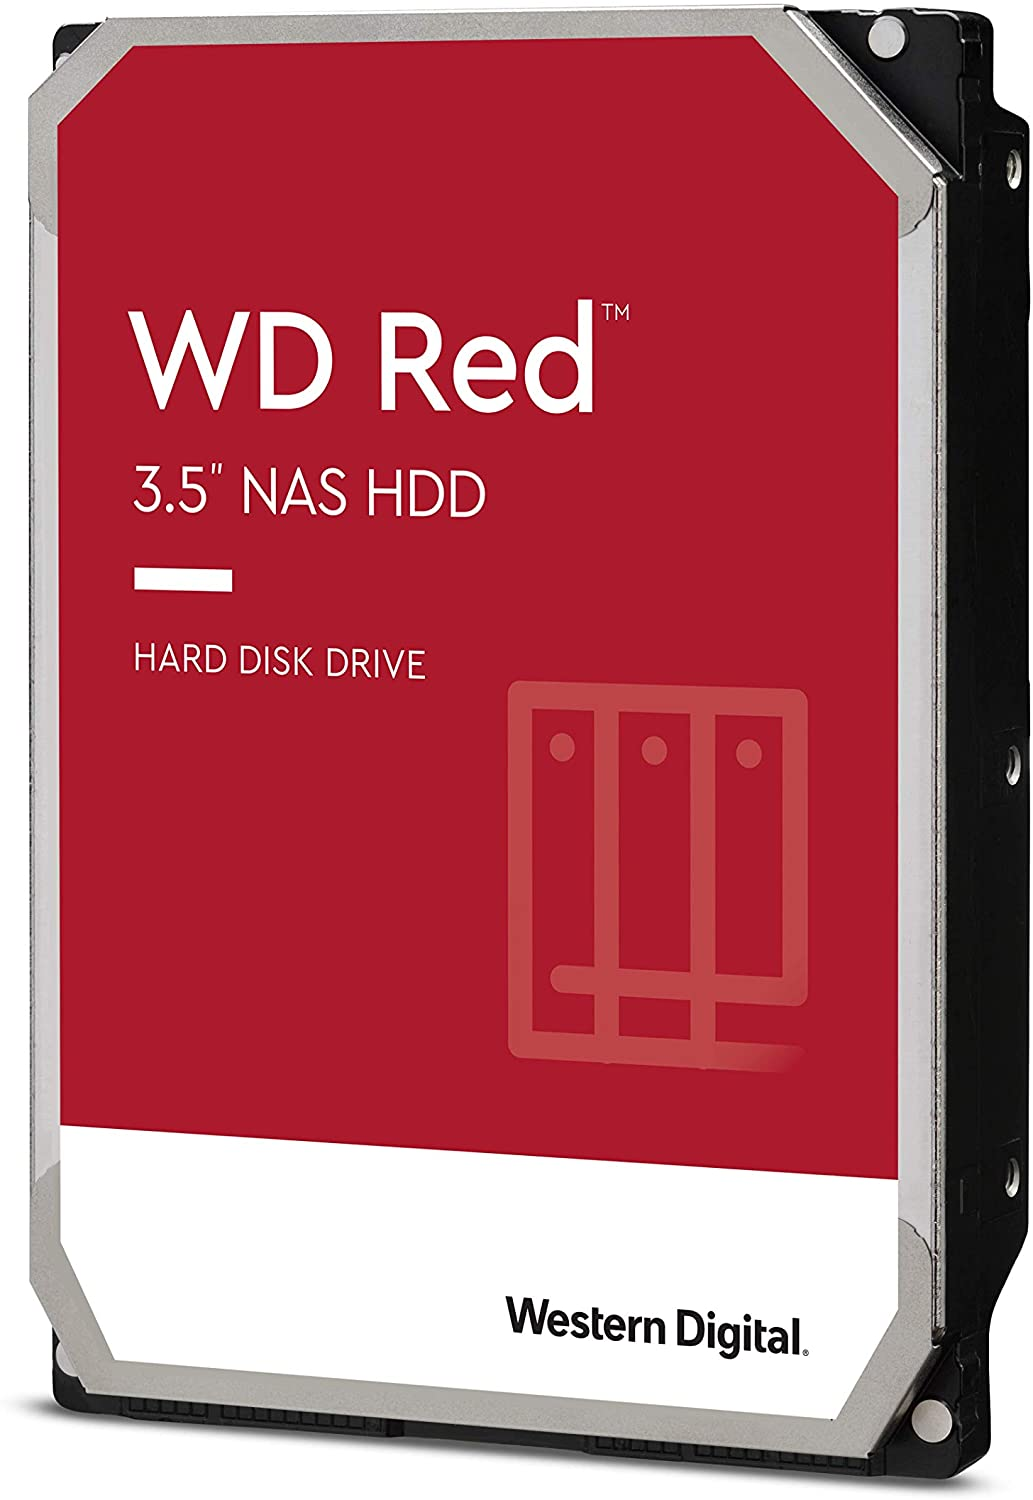 Amazon.com: Western Digital 6TB WD Red NAS Internal Hard Drive HDD - 5400 RPM, SATA 6 Gb/s, SMR, 256MB Cache, 3.5" - WD60EFAX : Electronics $104.99